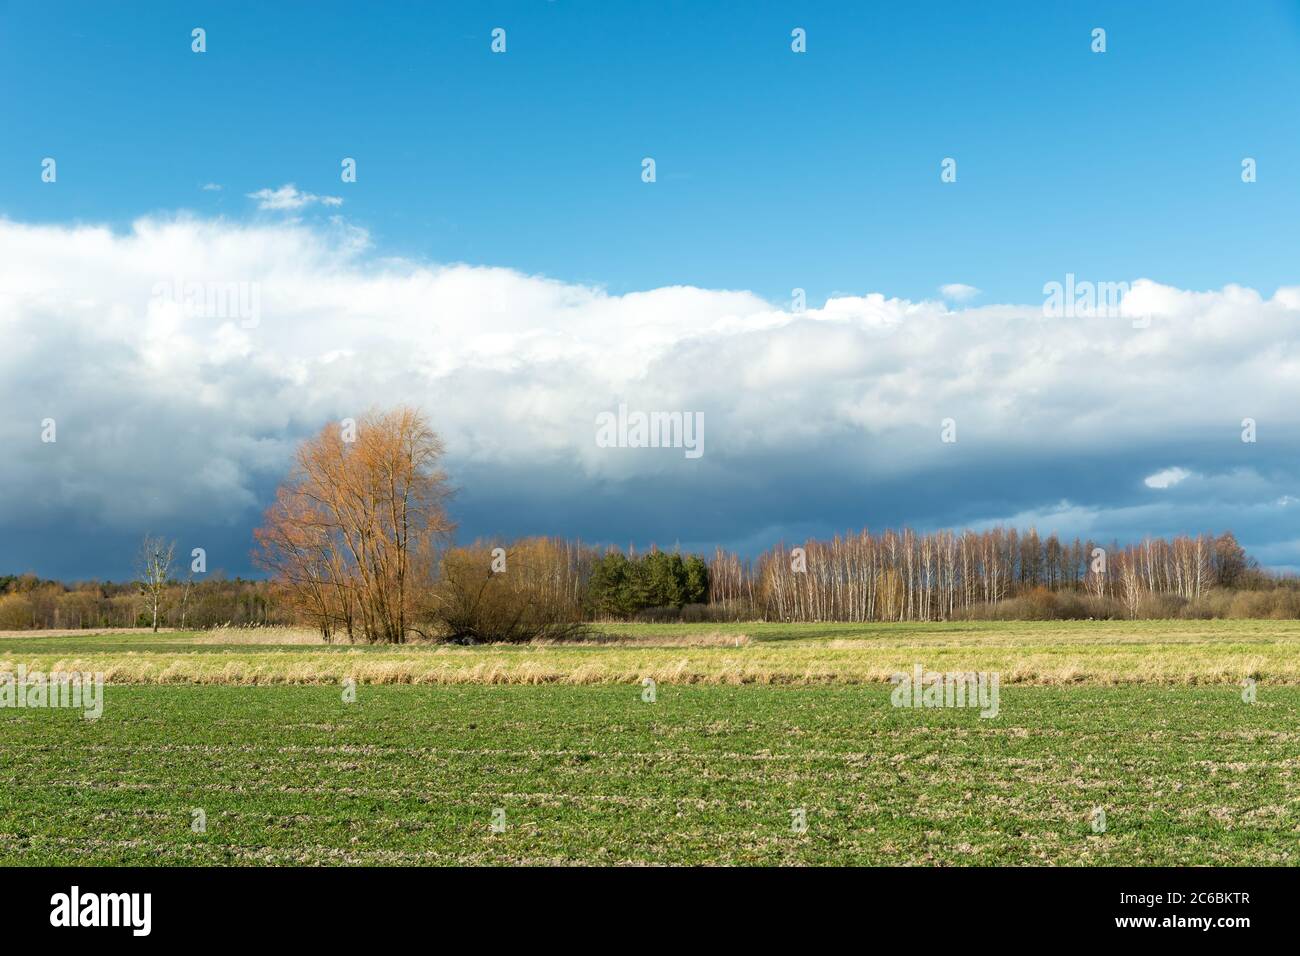 Wunderbare Wolke am blauen Himmel, bunte Bäume und grünes Feld, sonnige Frühlingsblick Stockfoto